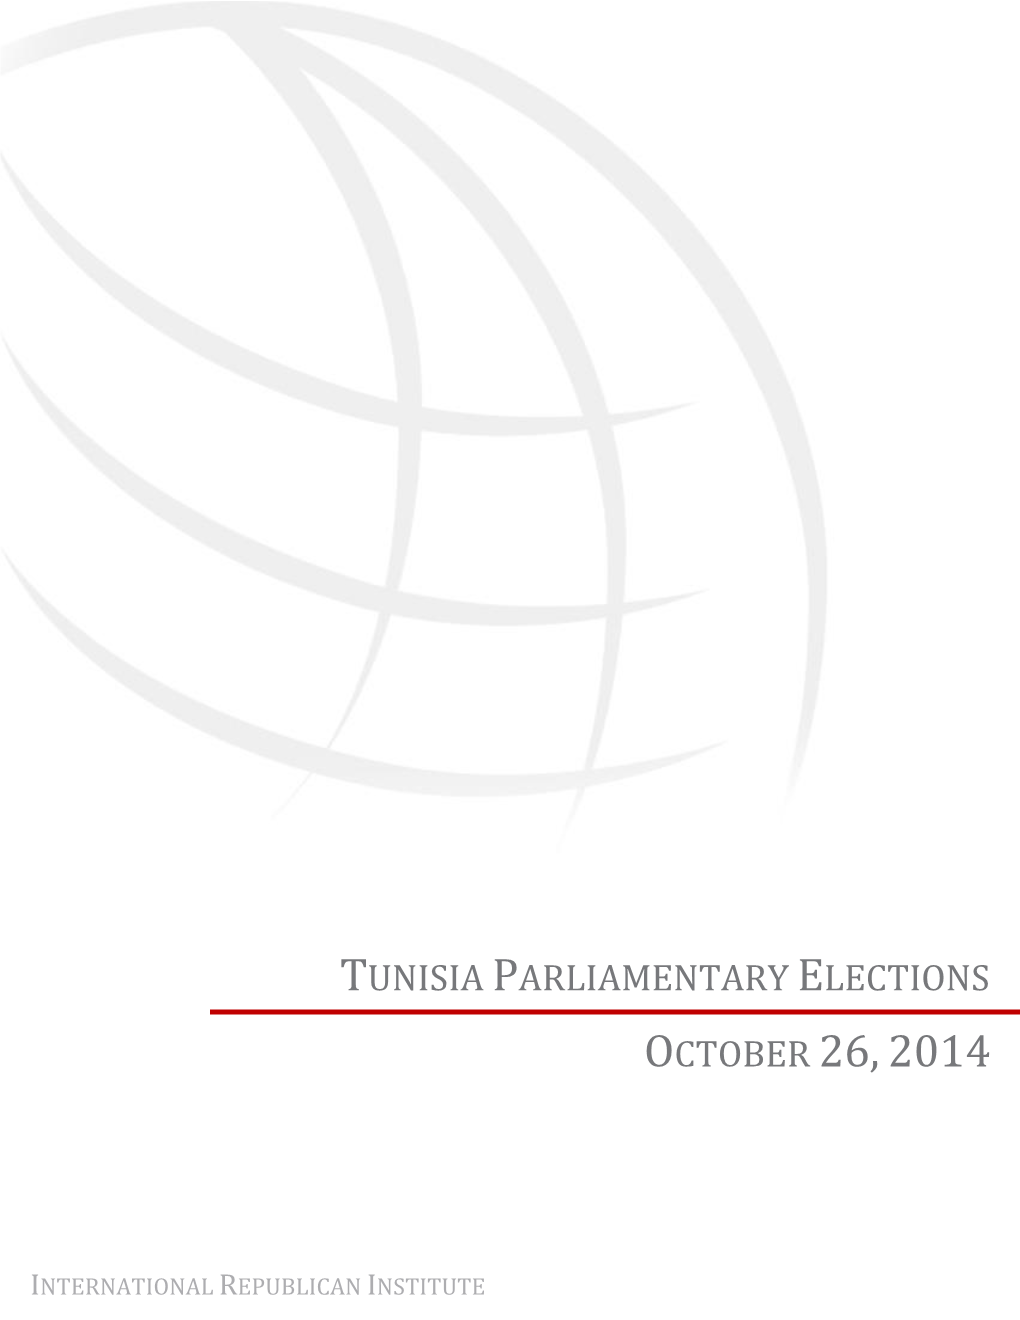 Tunisia Parliamentary Elections October 26,2014